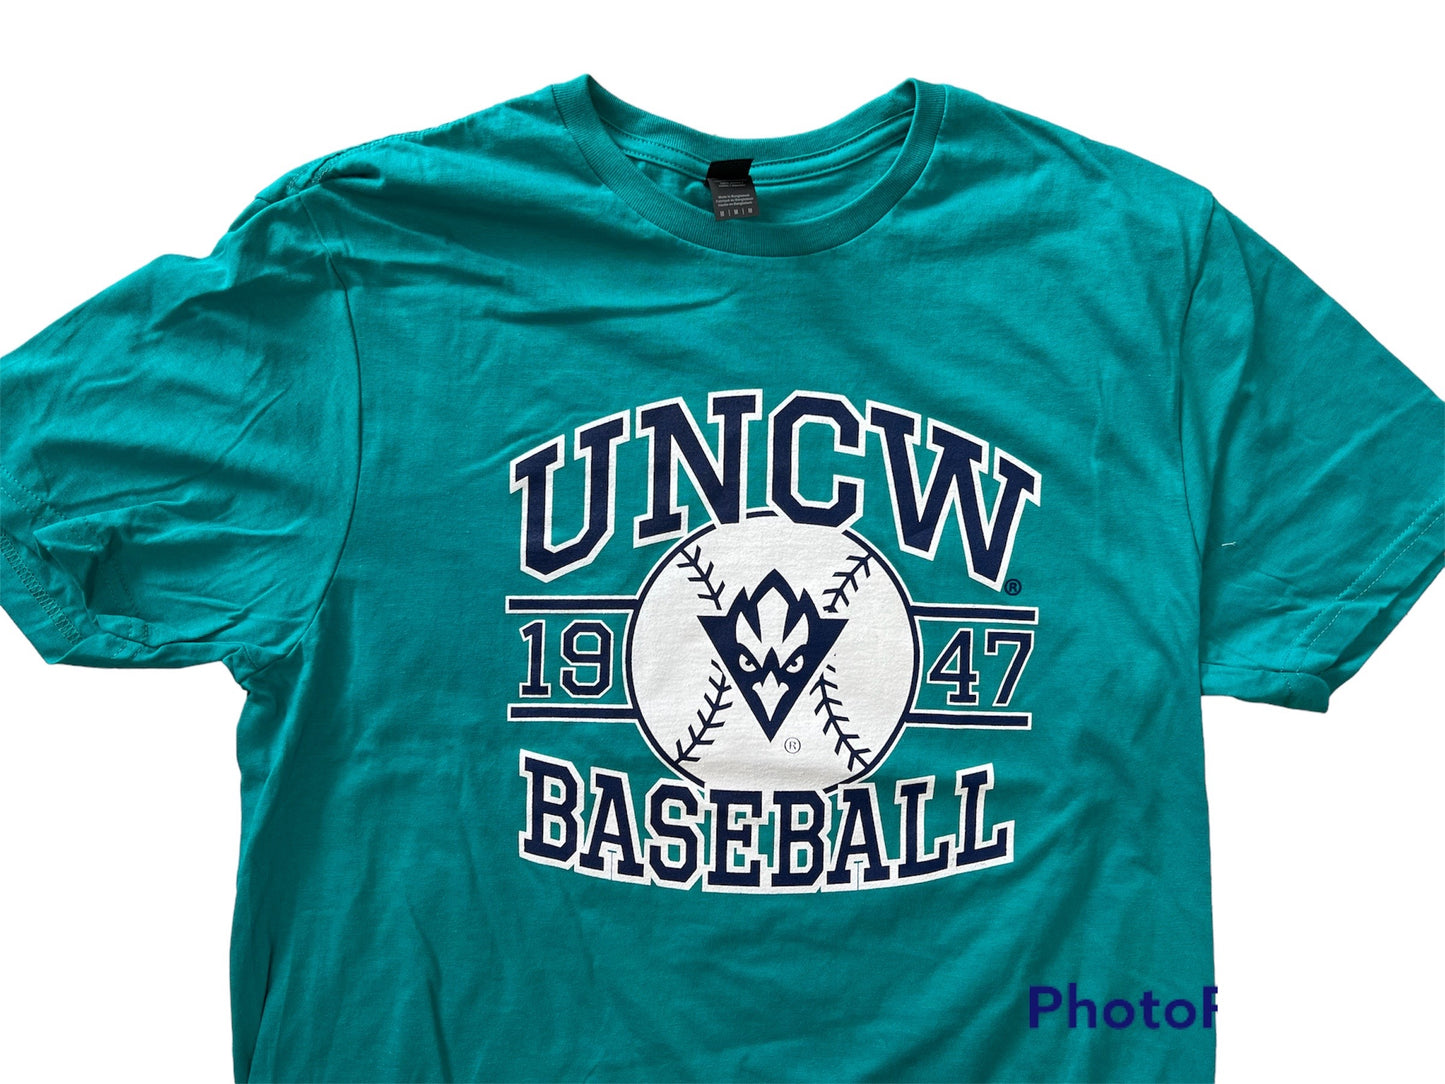 UNCW Baseball  - T Shirt - Teal